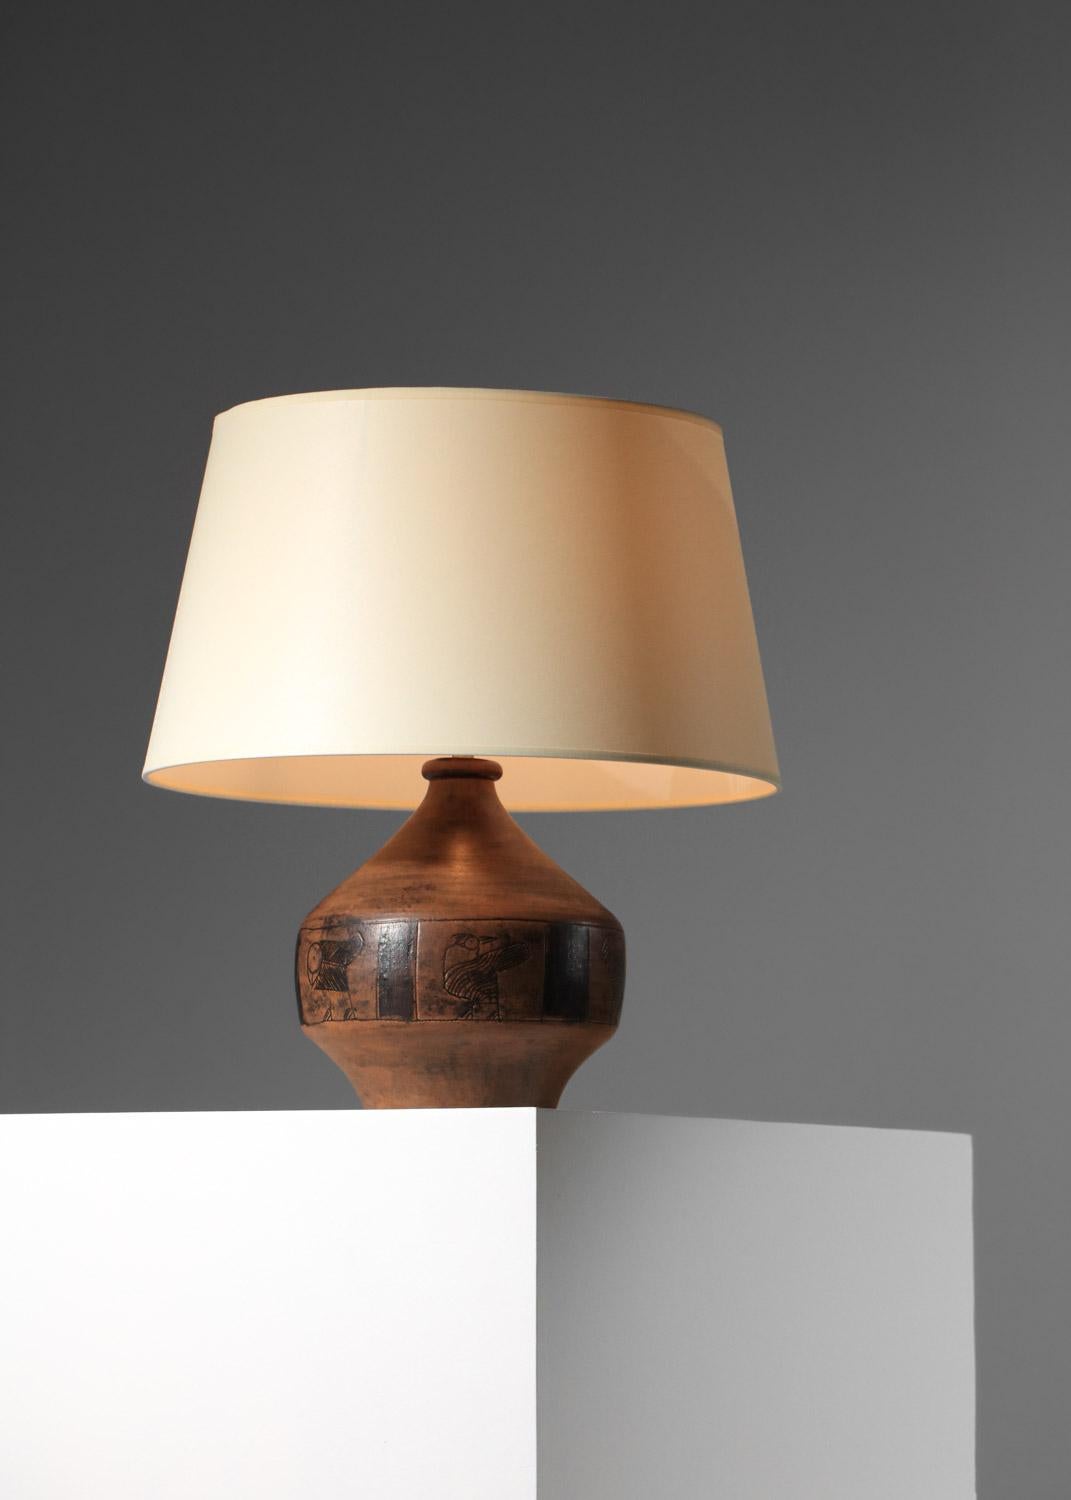 Ceramic Jacques blin brown ceramic lamp with bird design  